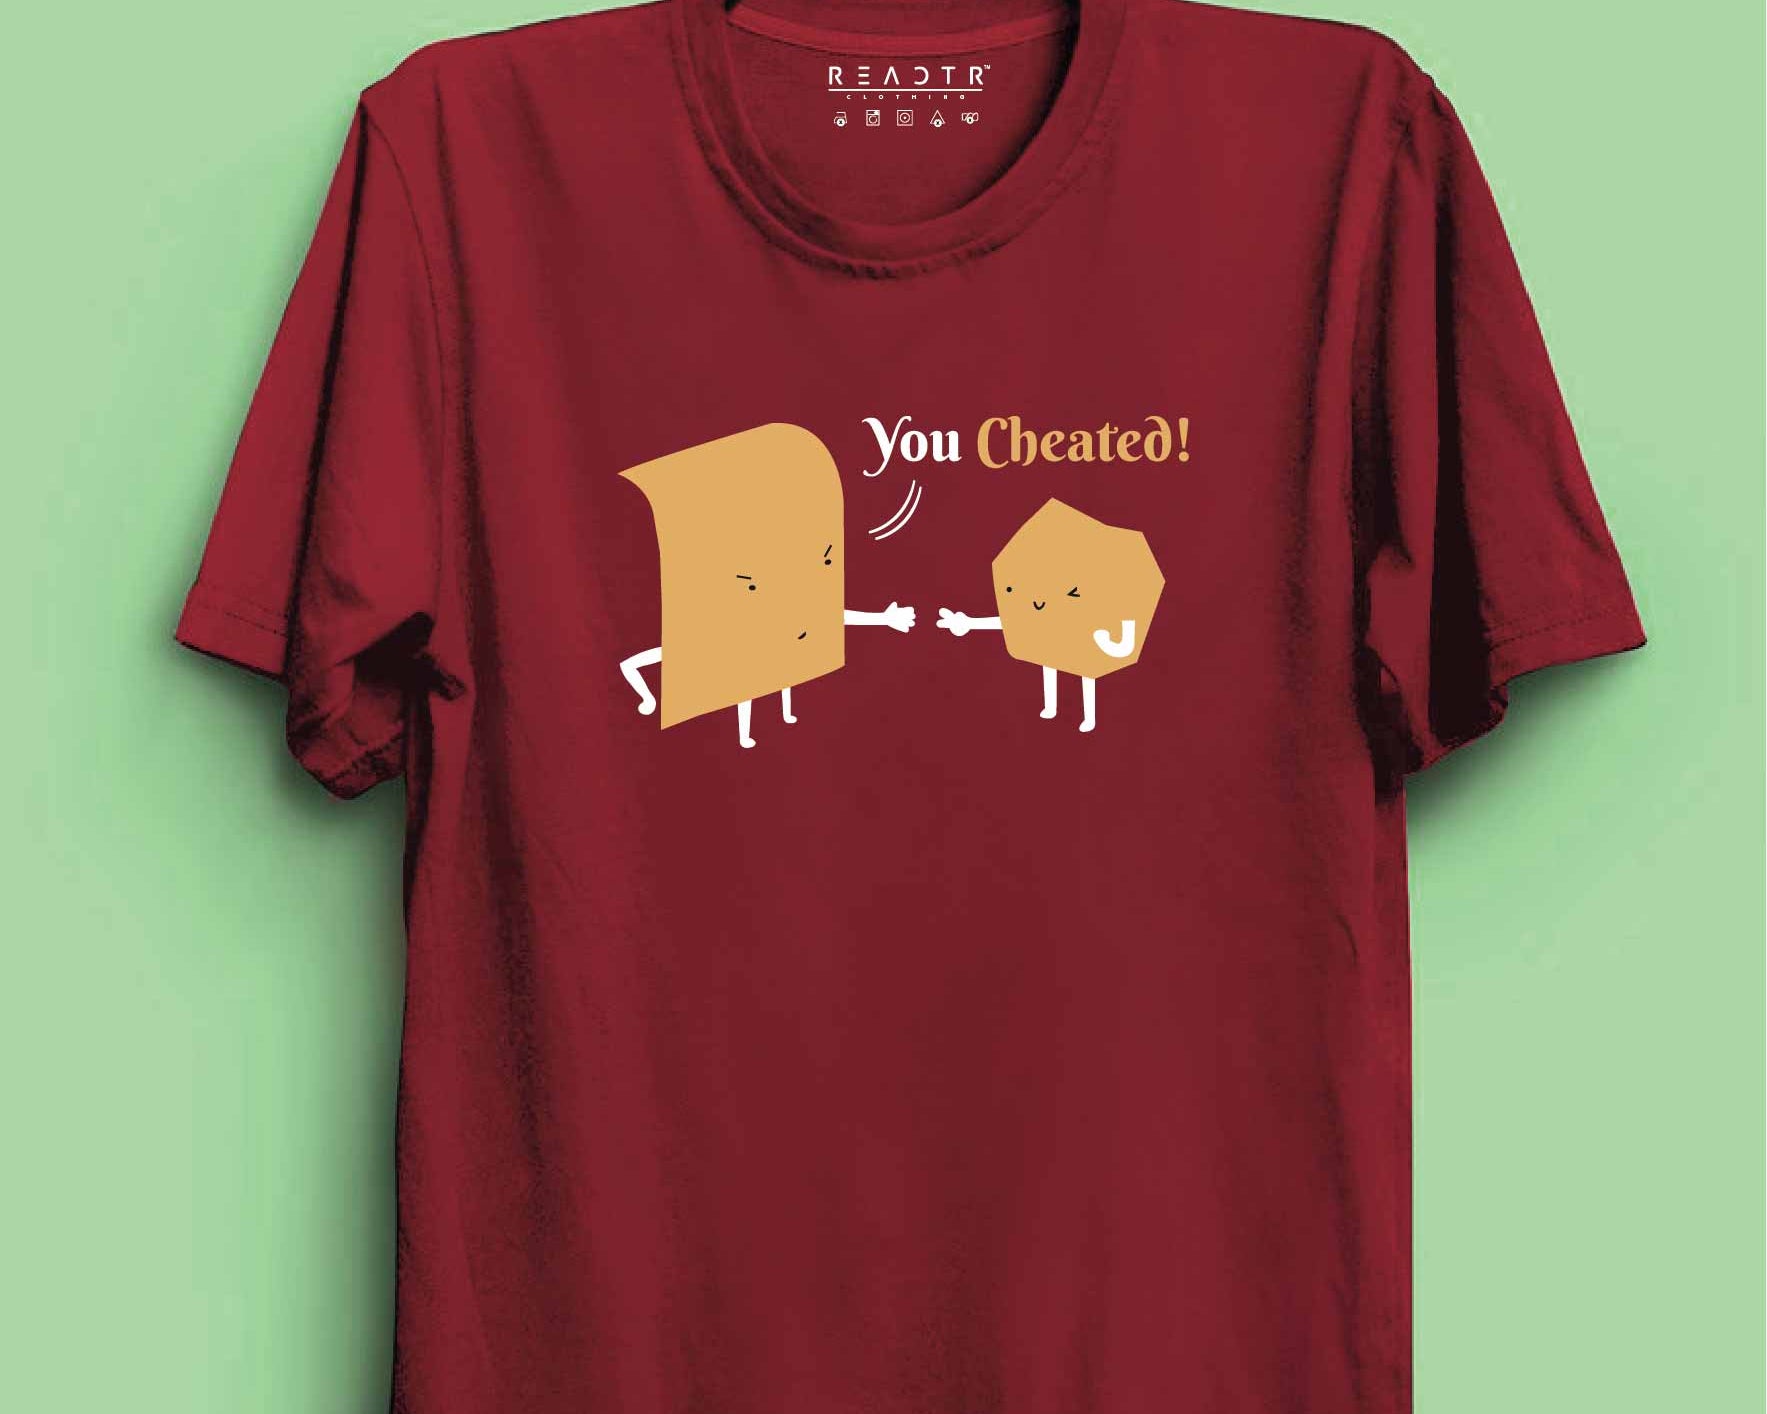 You Cheated Reactr Tshirts For Men - Eyewearlabs